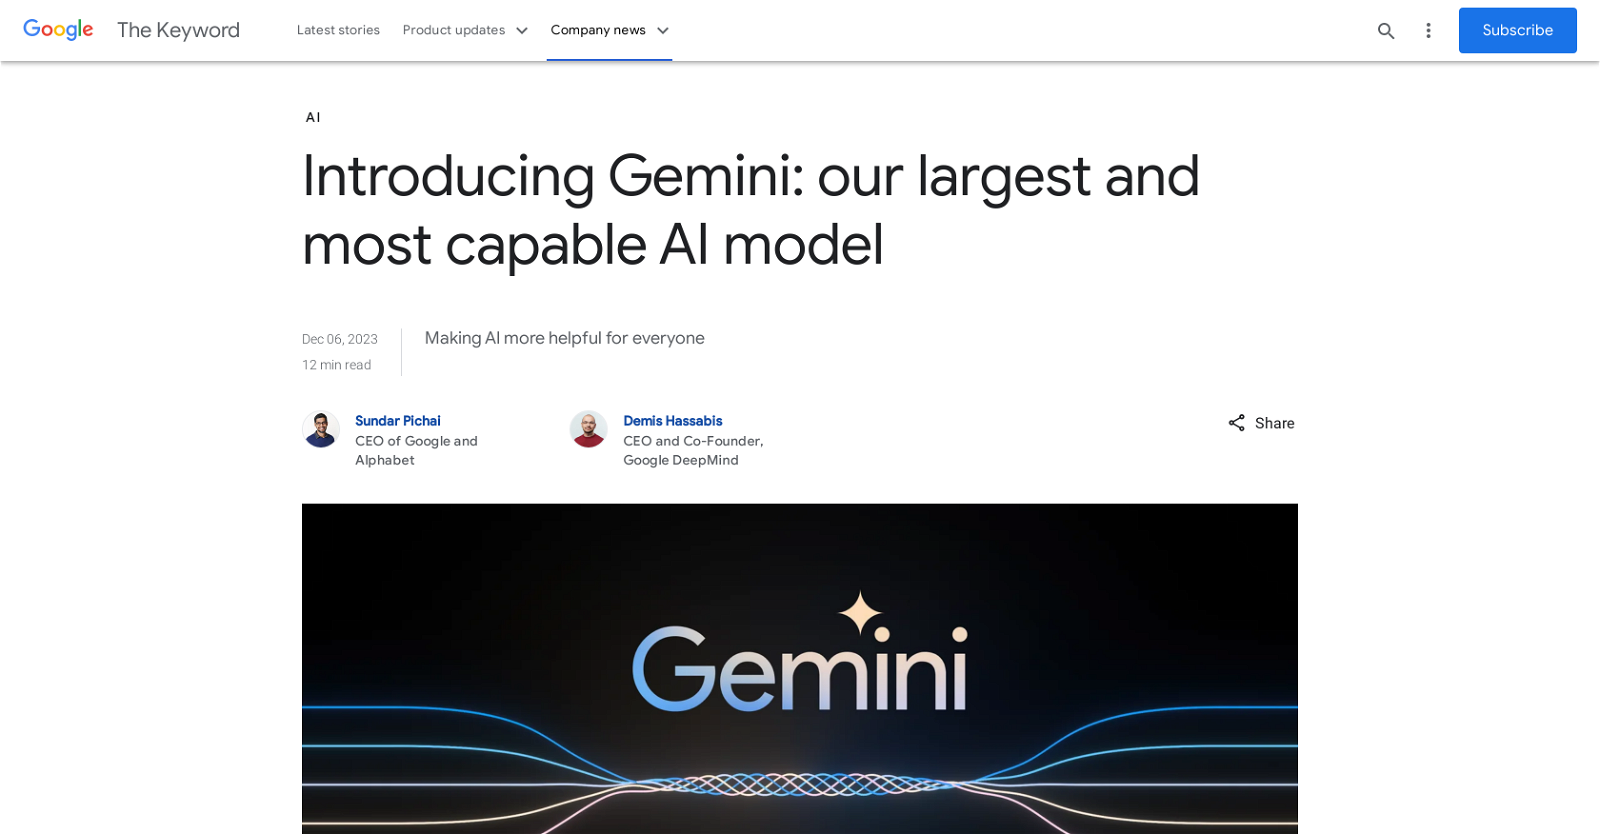 Gemini by Google website